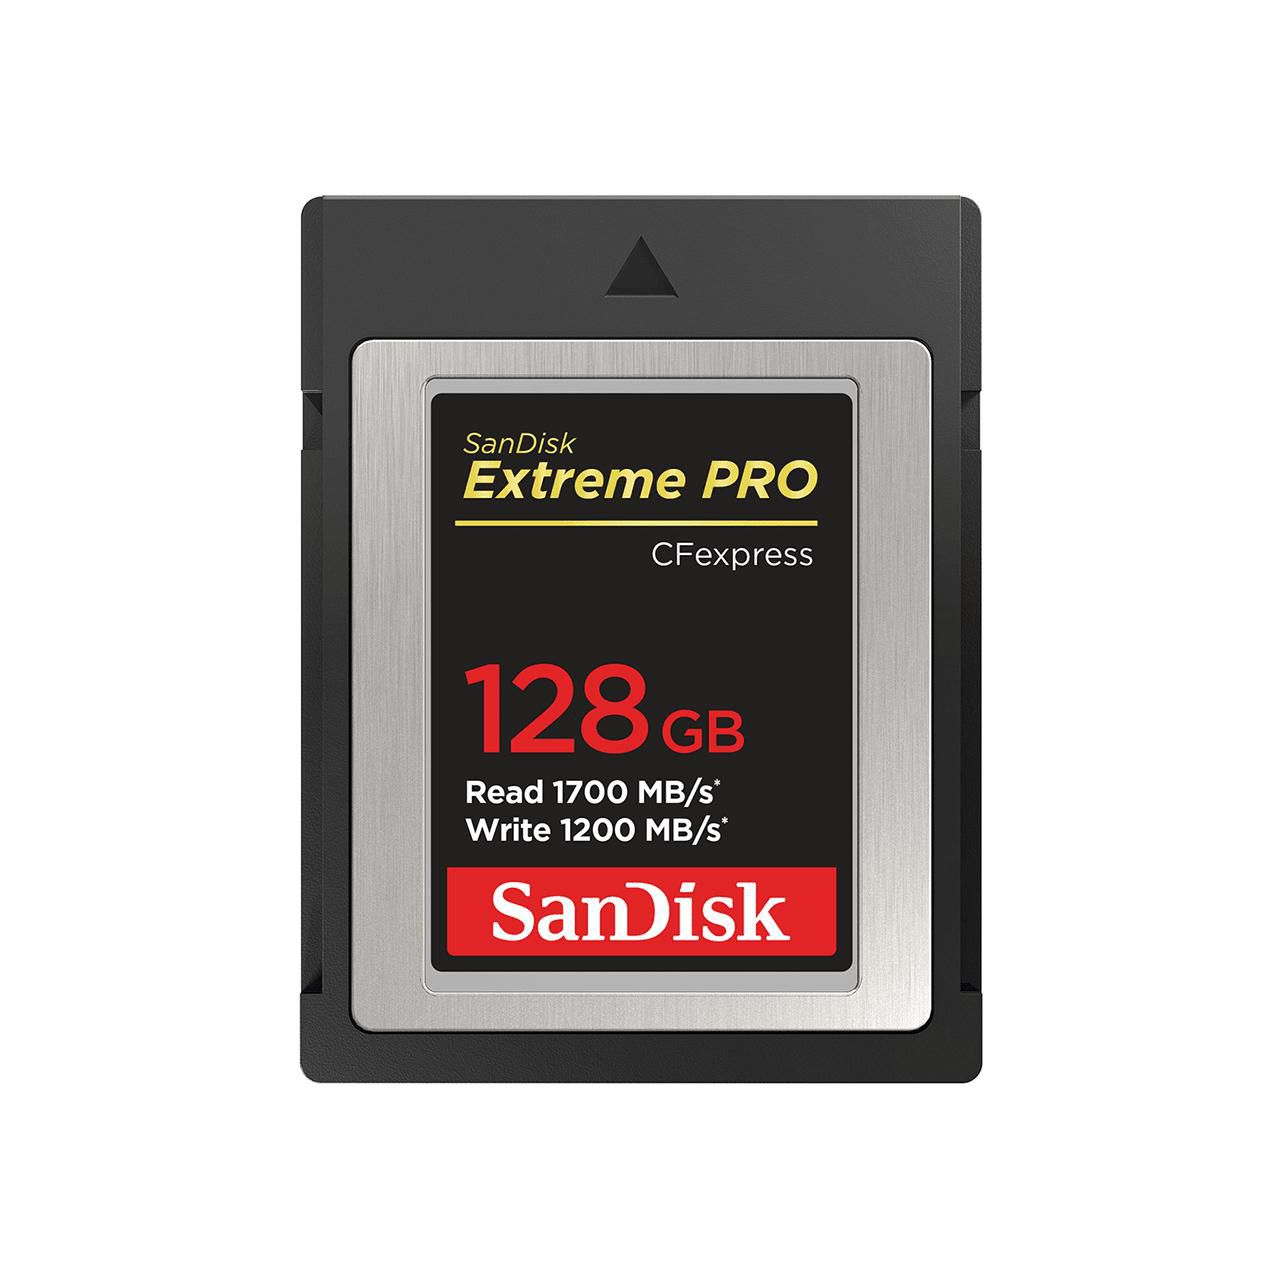 SANDISK ExtremePro CFexpress 128GB